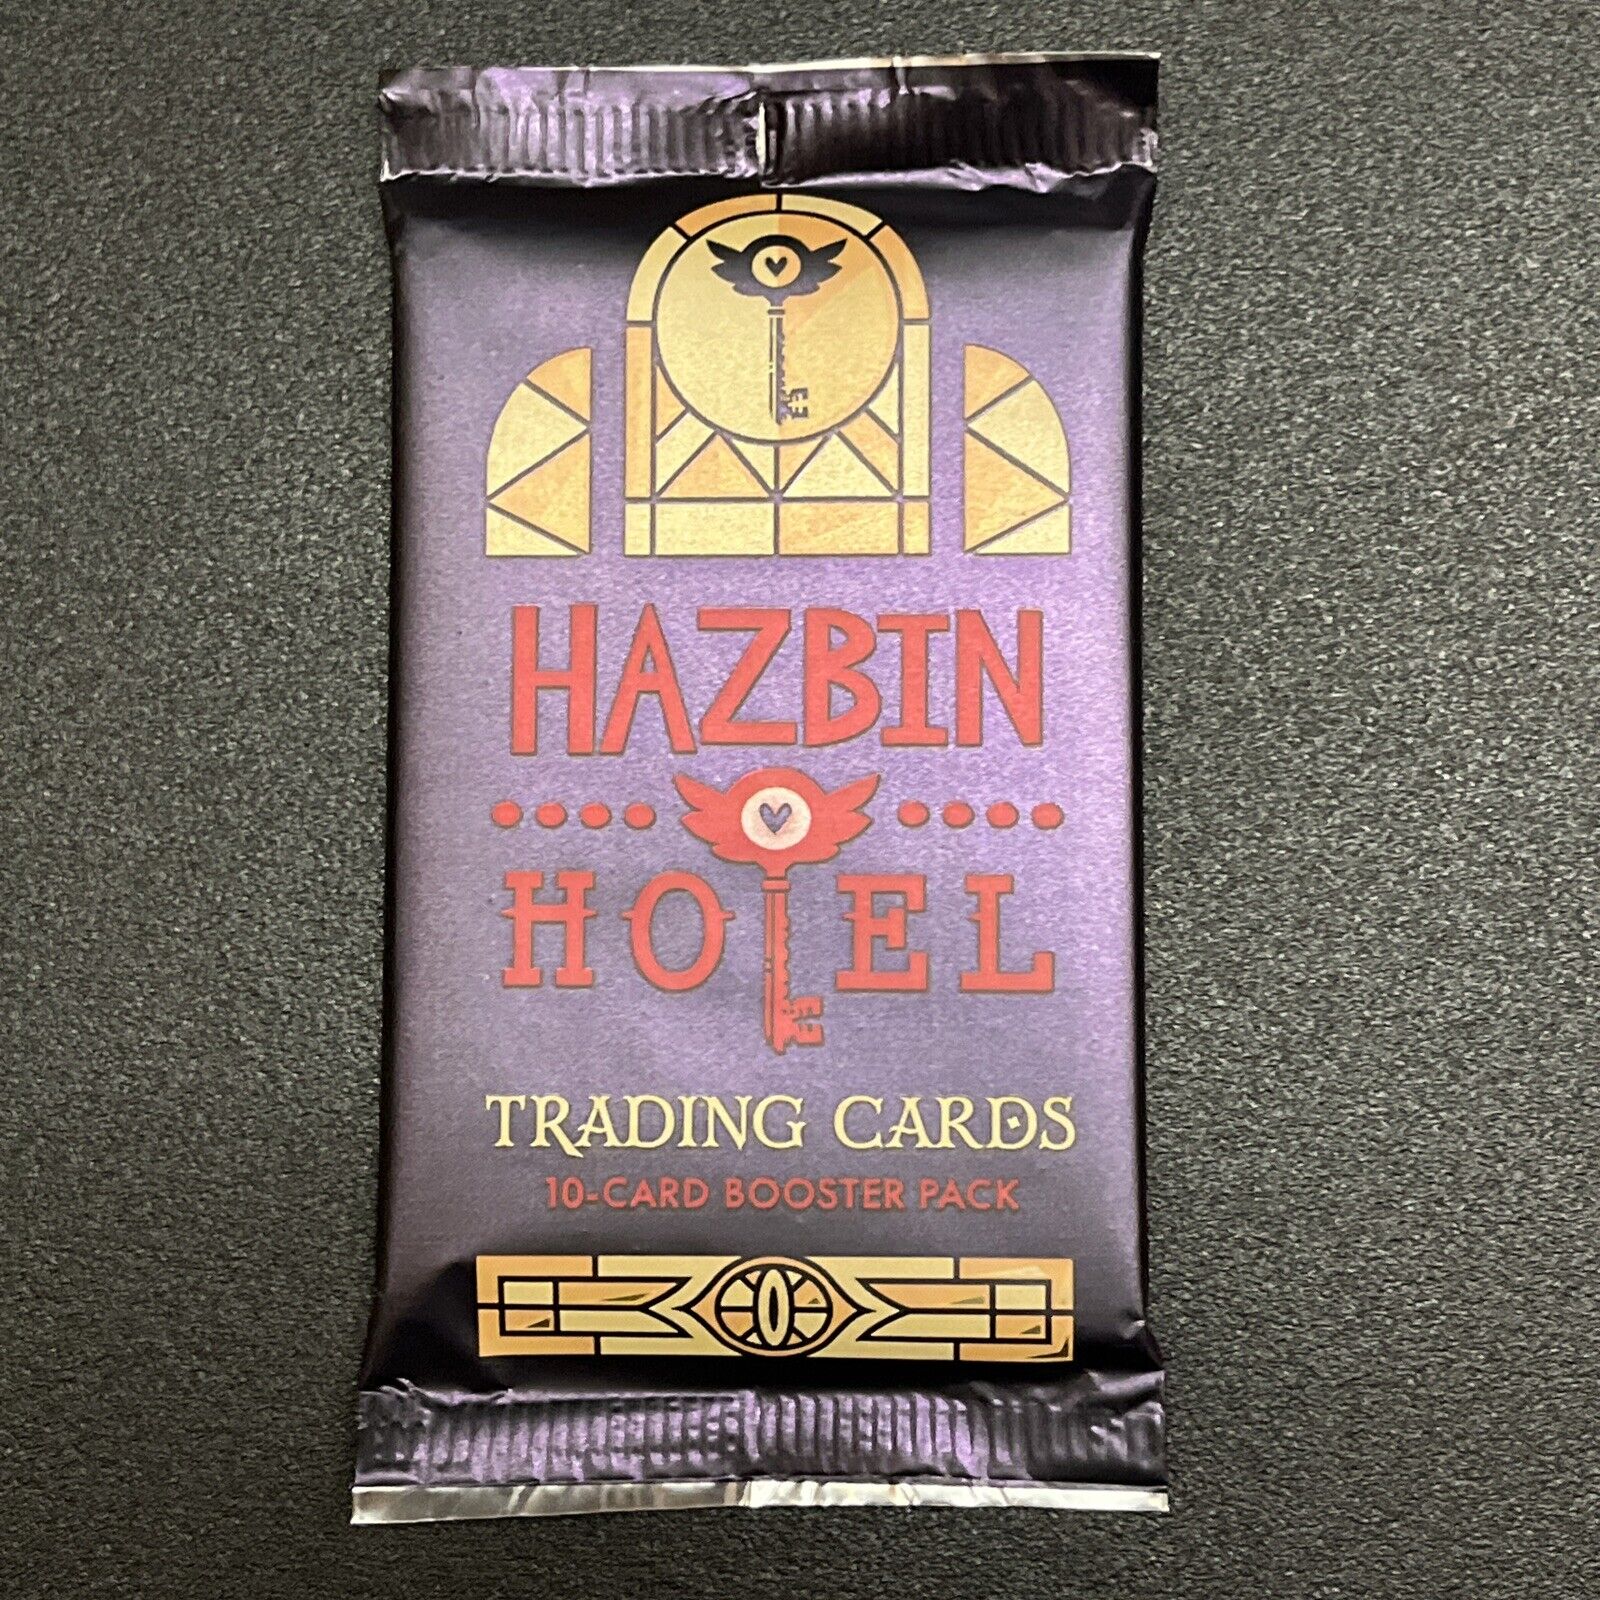 Hazbin Hotel Trading Card Pack 1st Edition - IN HAND - SHIPS IMMEDIATELY